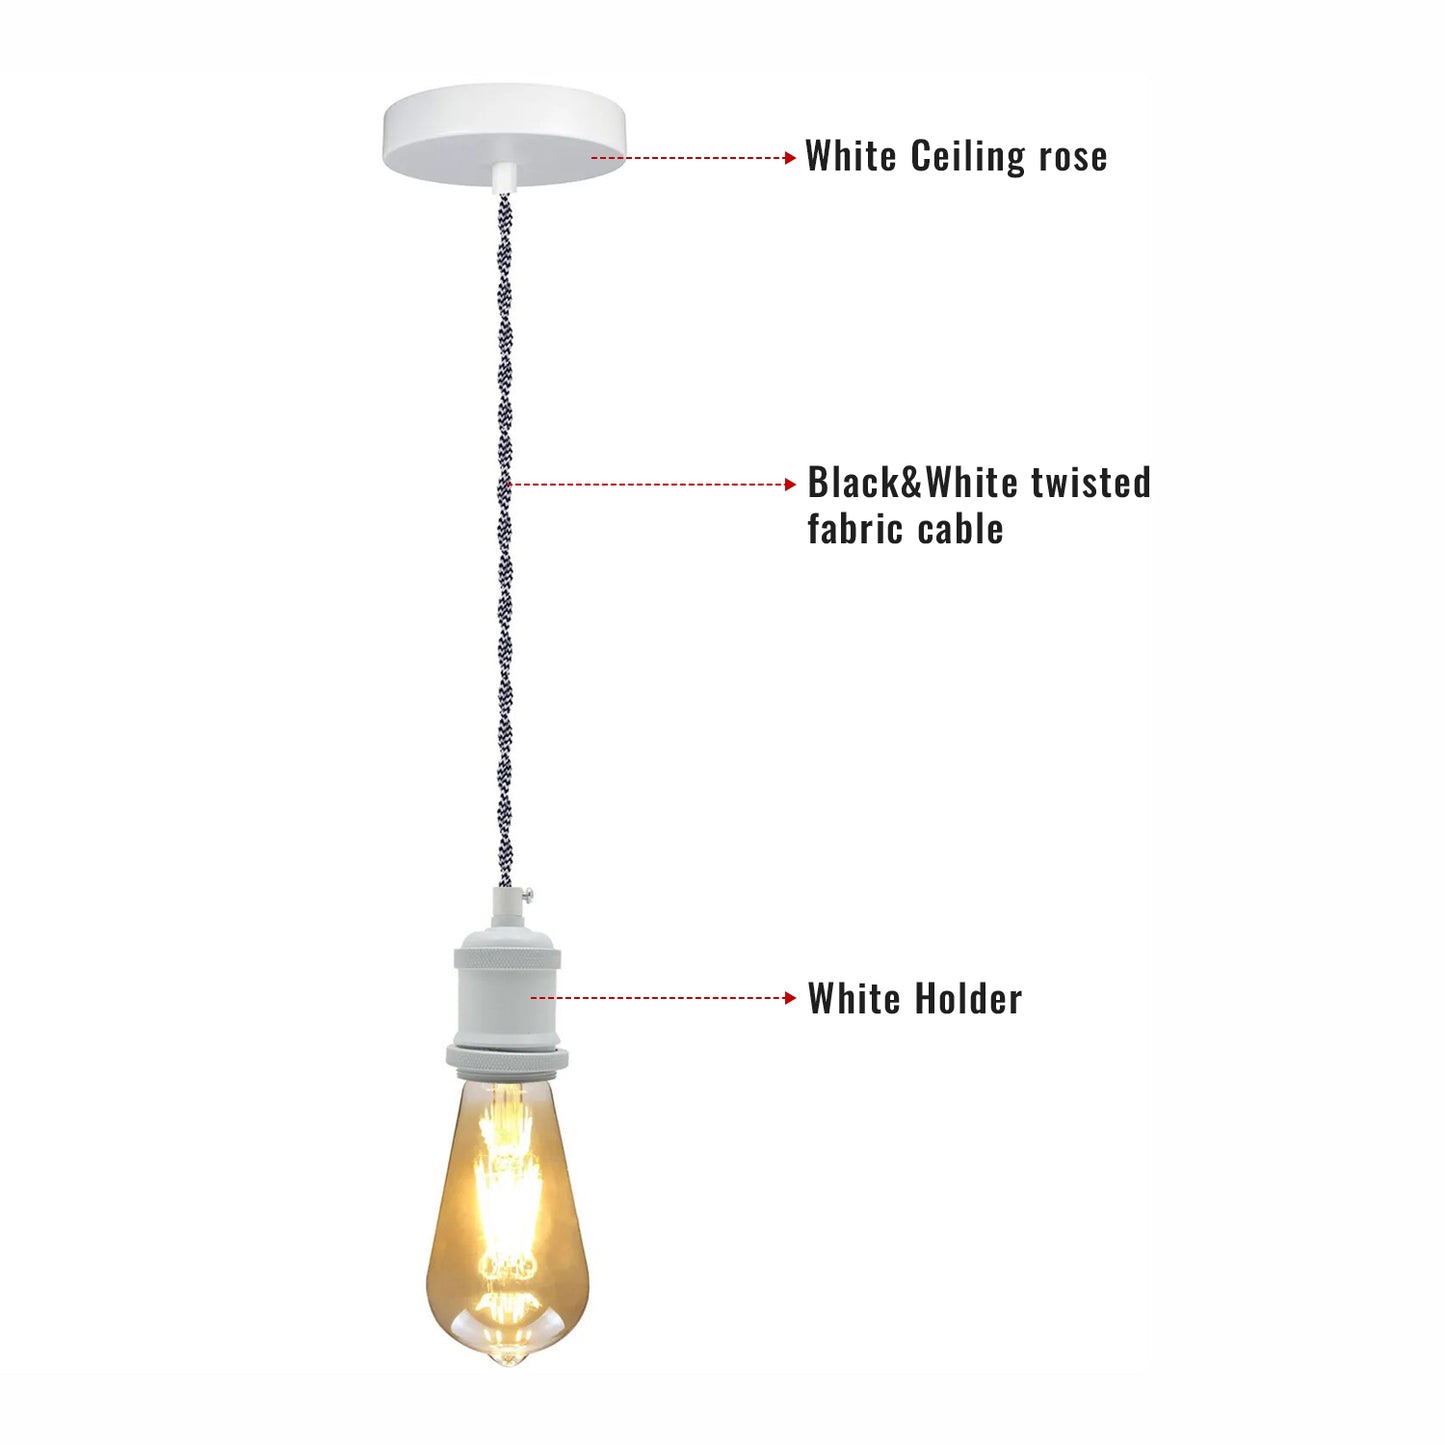 Twisted Braided Flex 1m Metal Ceiling Light Fitting Lamp Holder ~3445